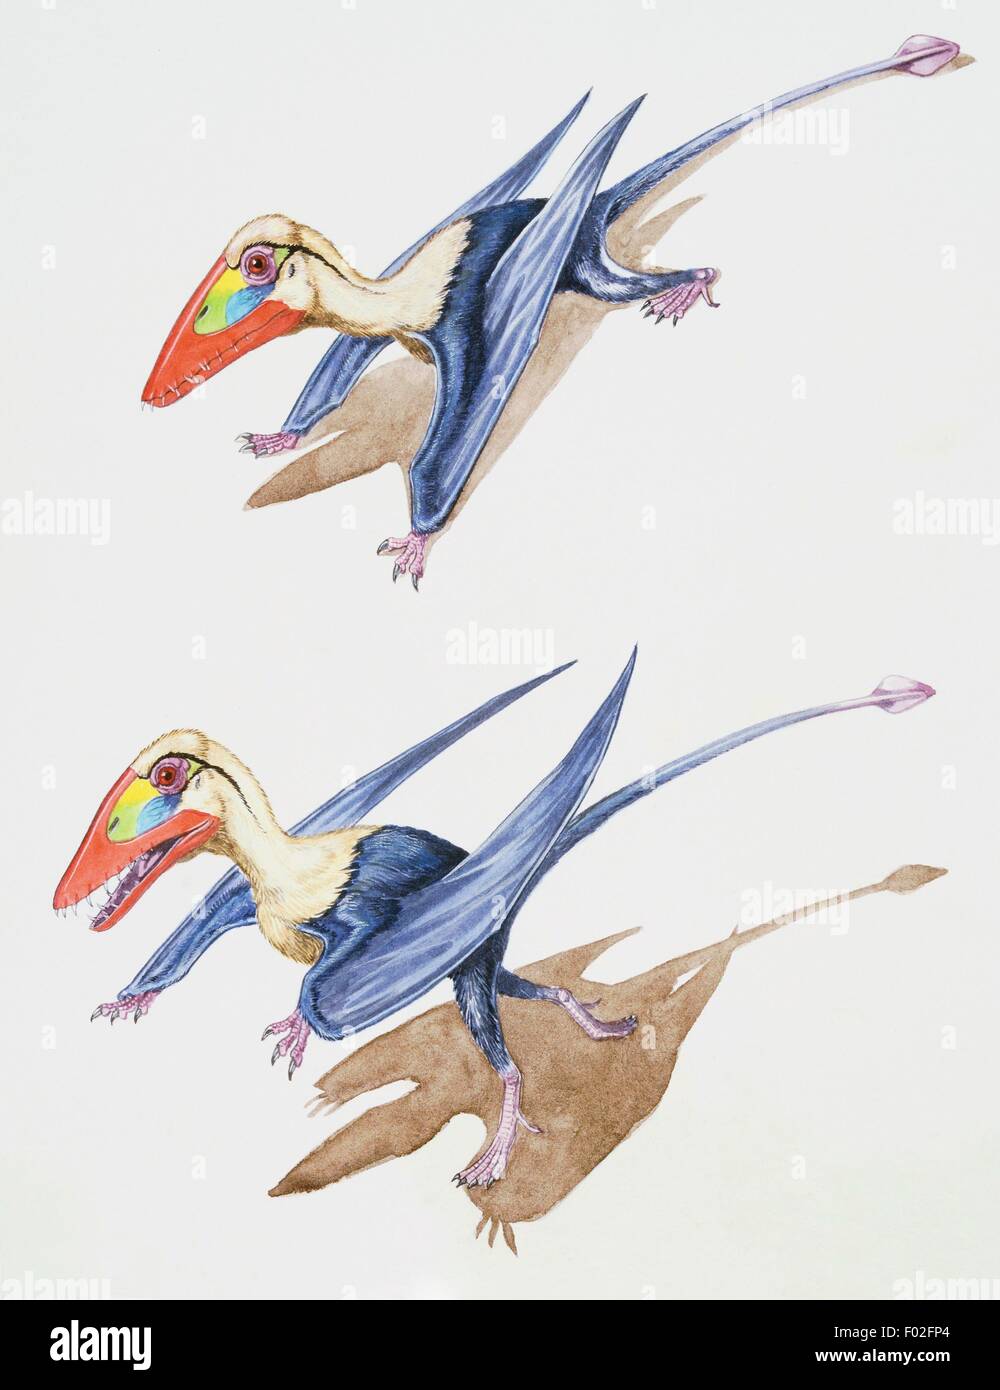 Balades Pterosaurus et ramper. Illustration de James Robins. Banque D'Images